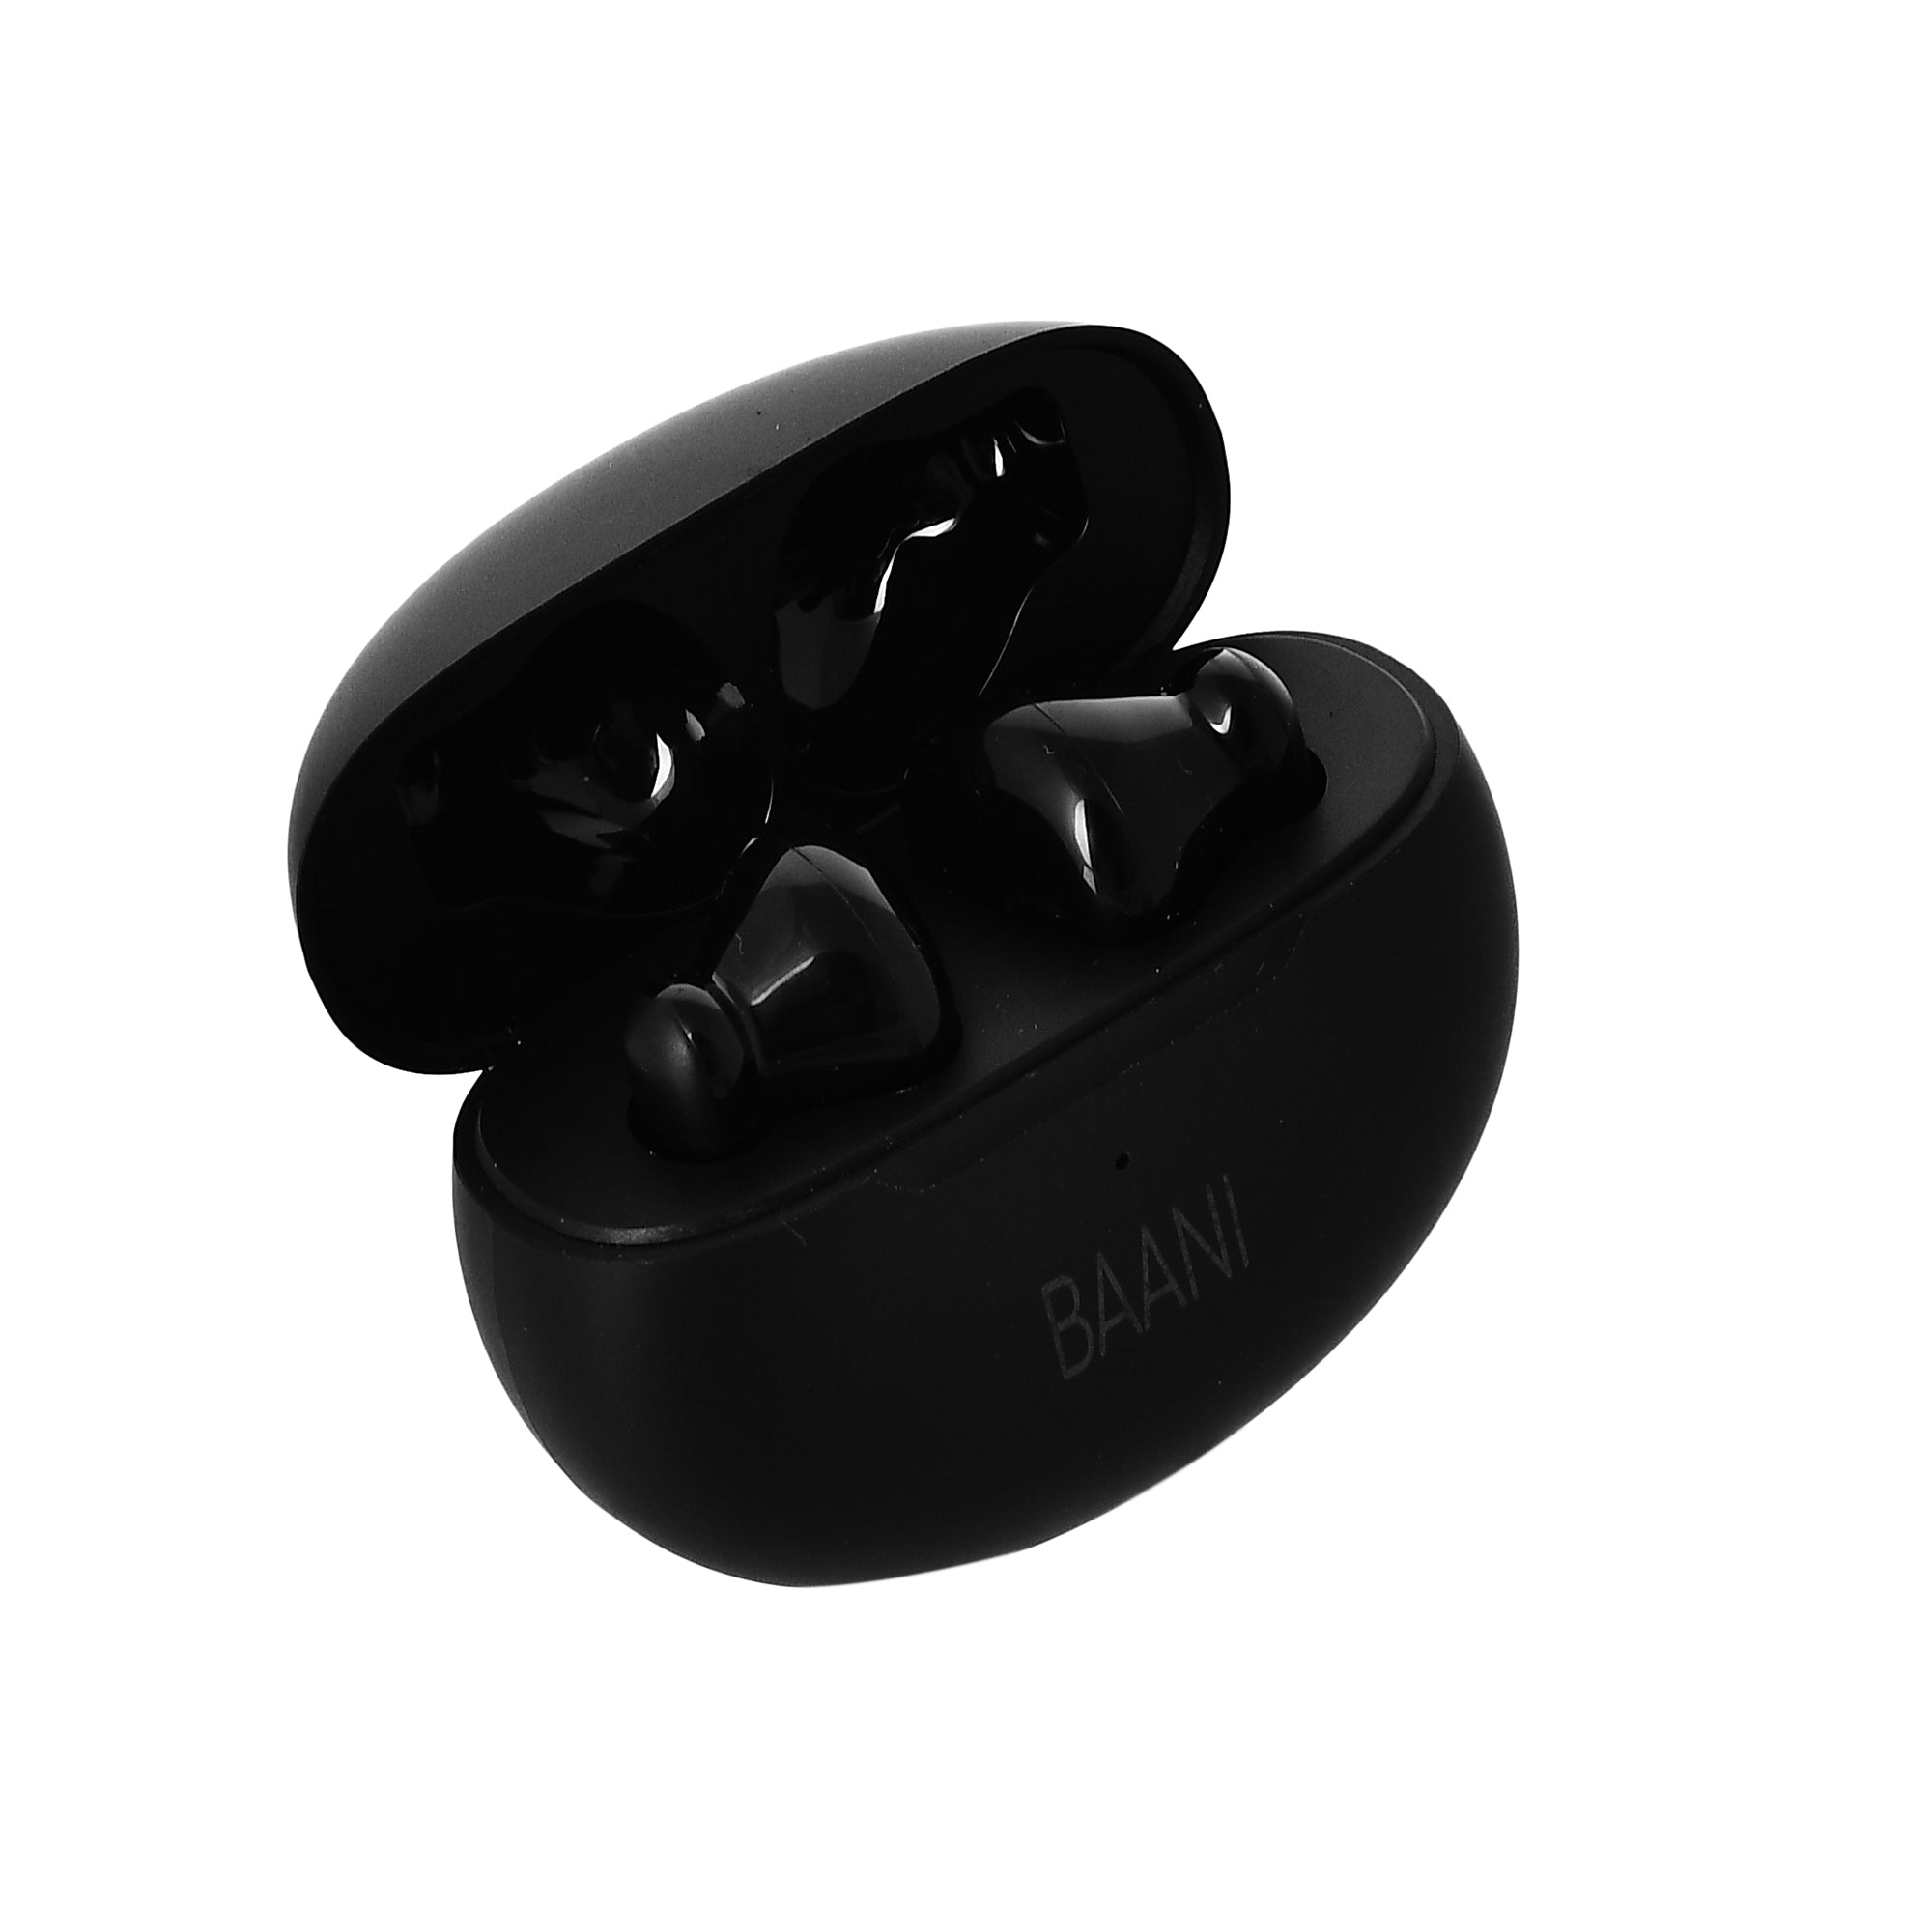 BT 101 Black earbuds with black case